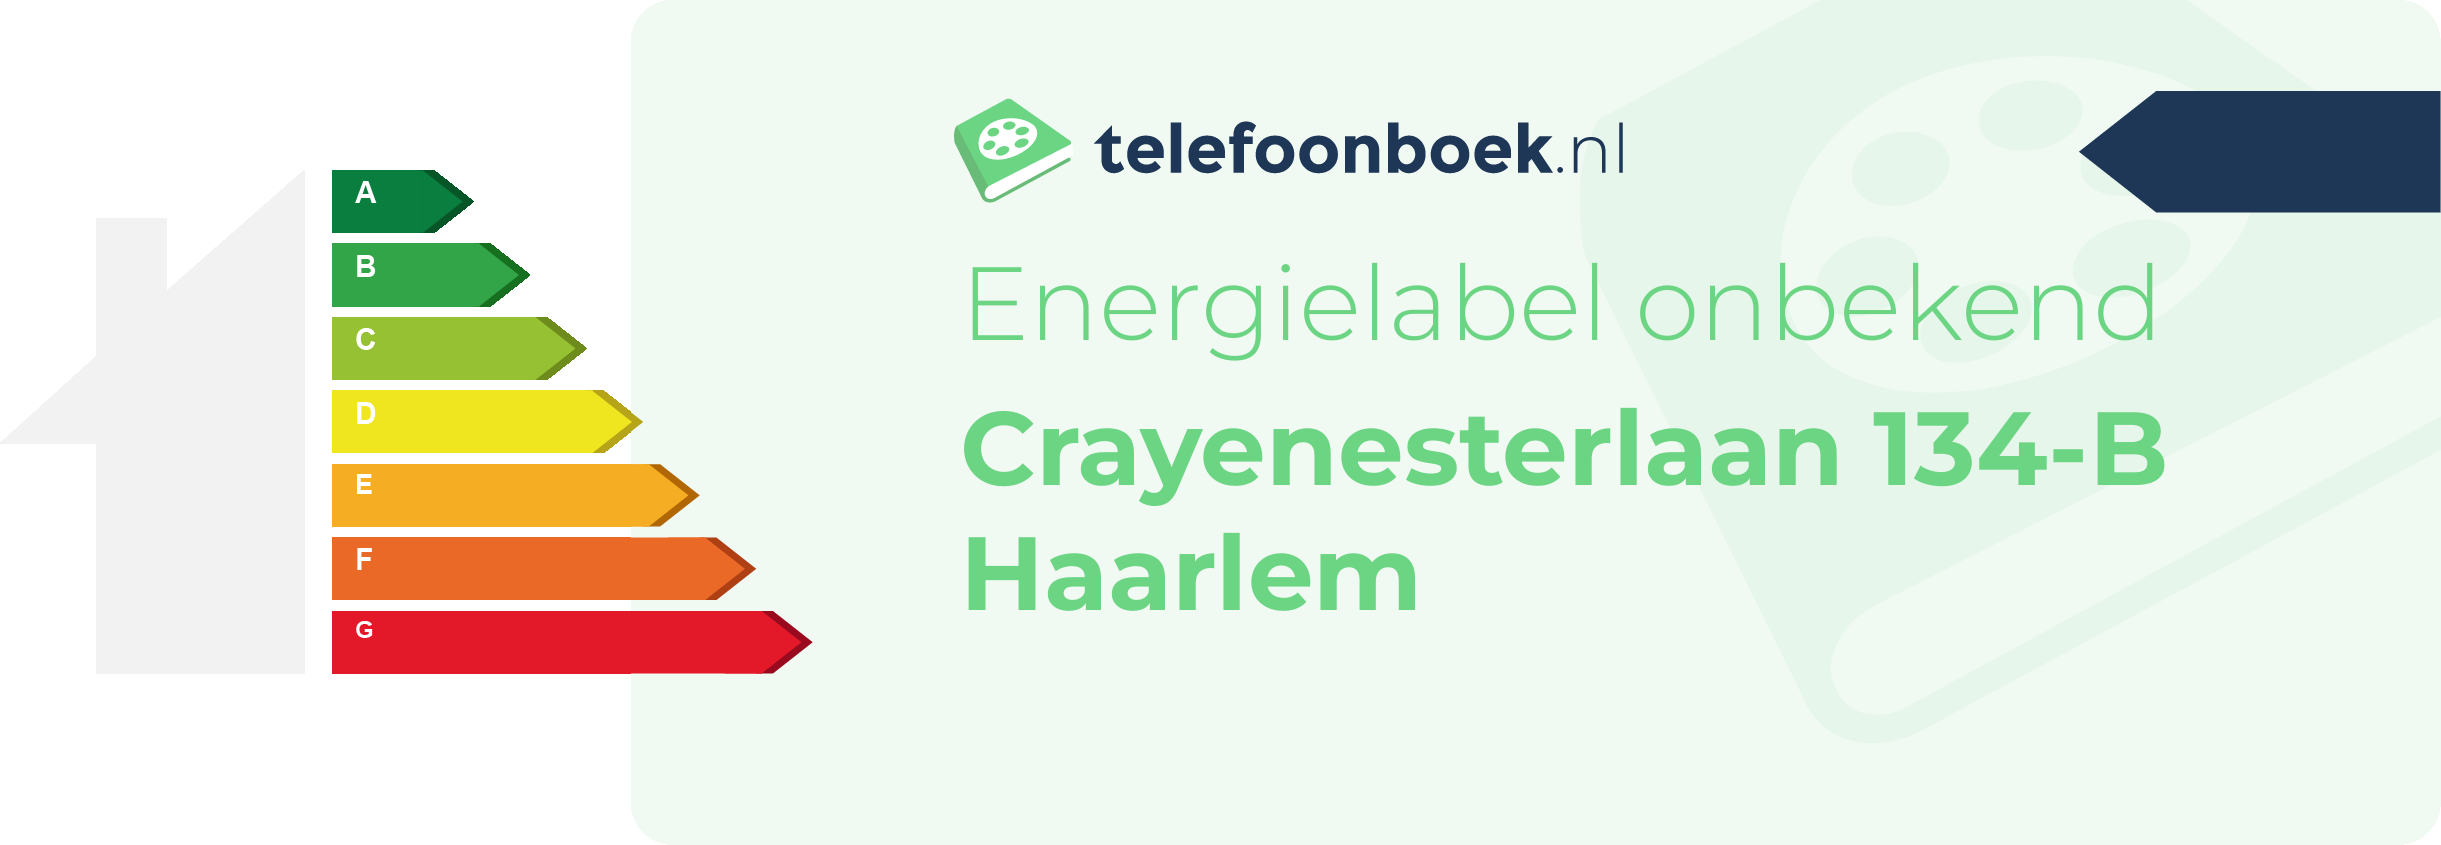 Energielabel Crayenesterlaan 134-B Haarlem